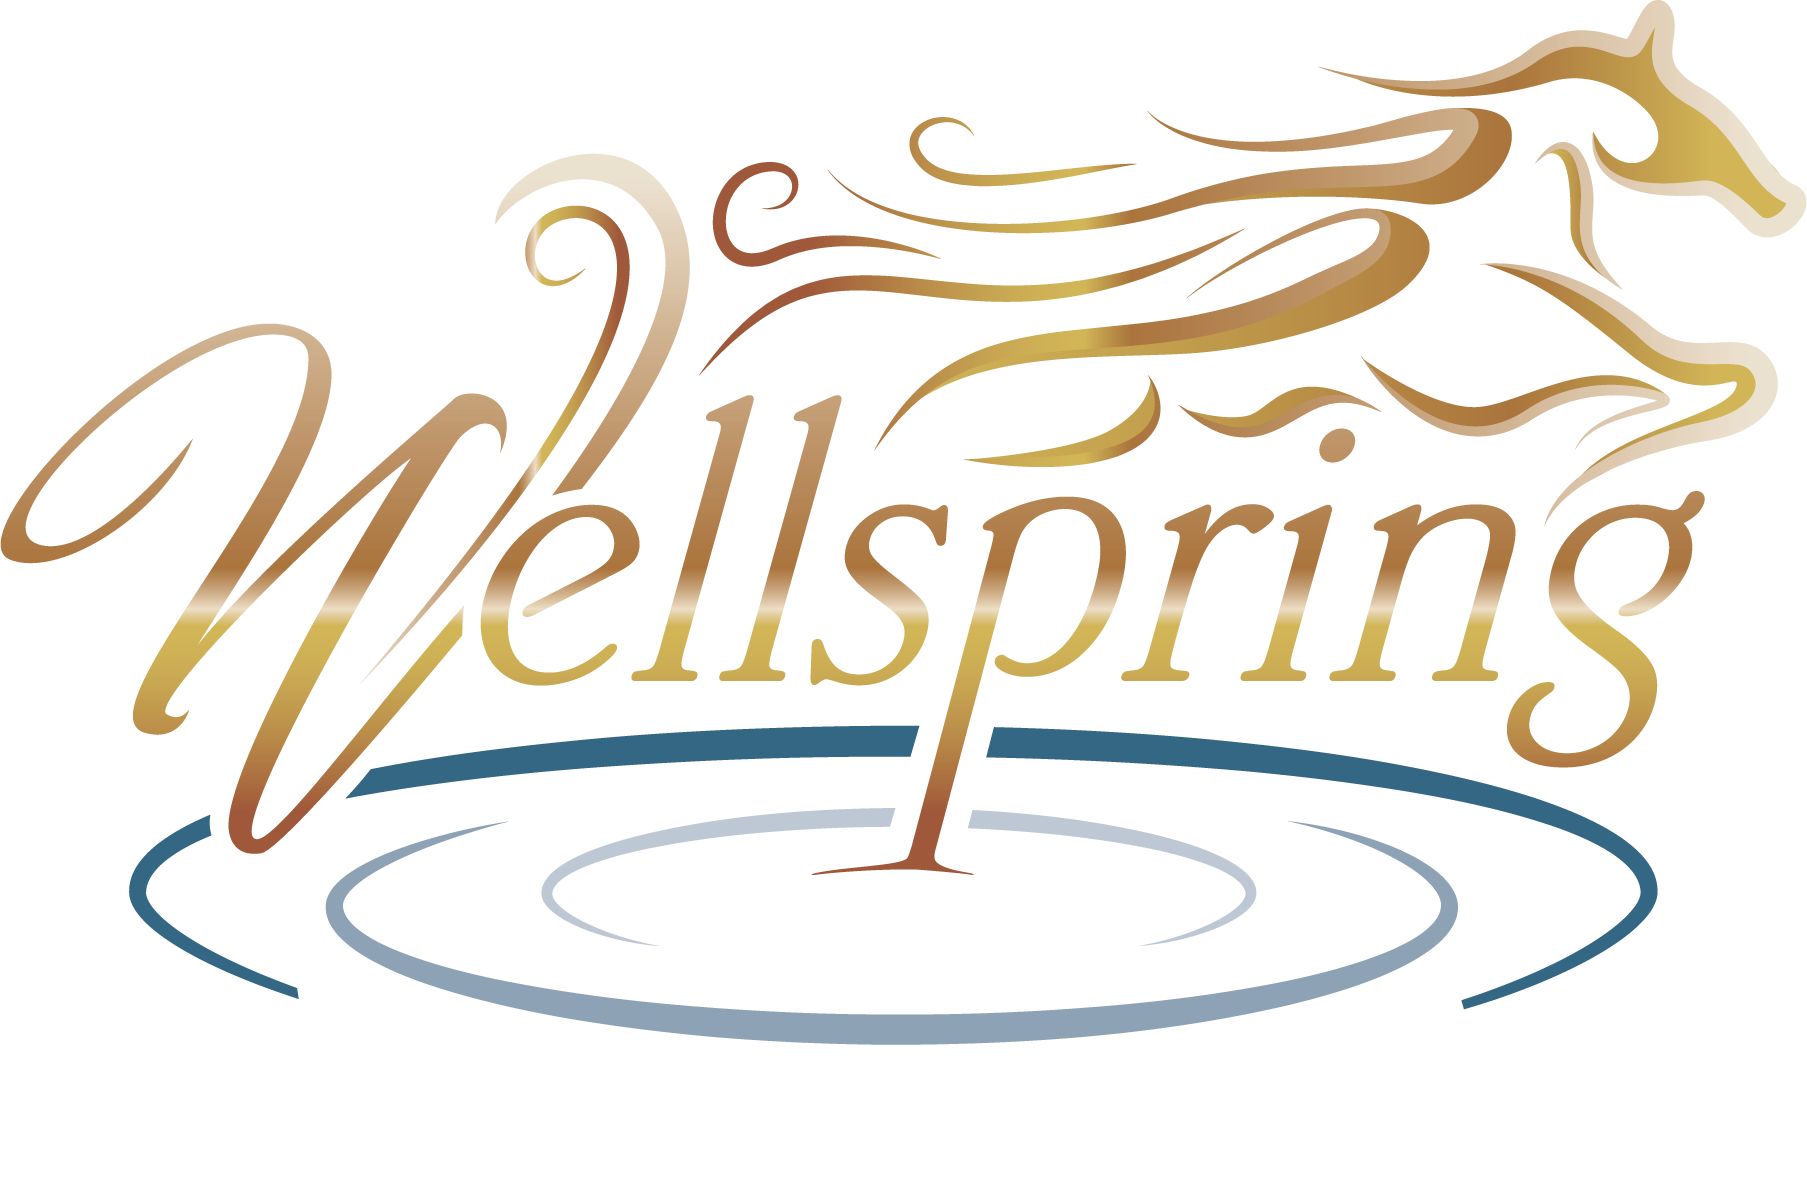 Wellspring Valley Farm